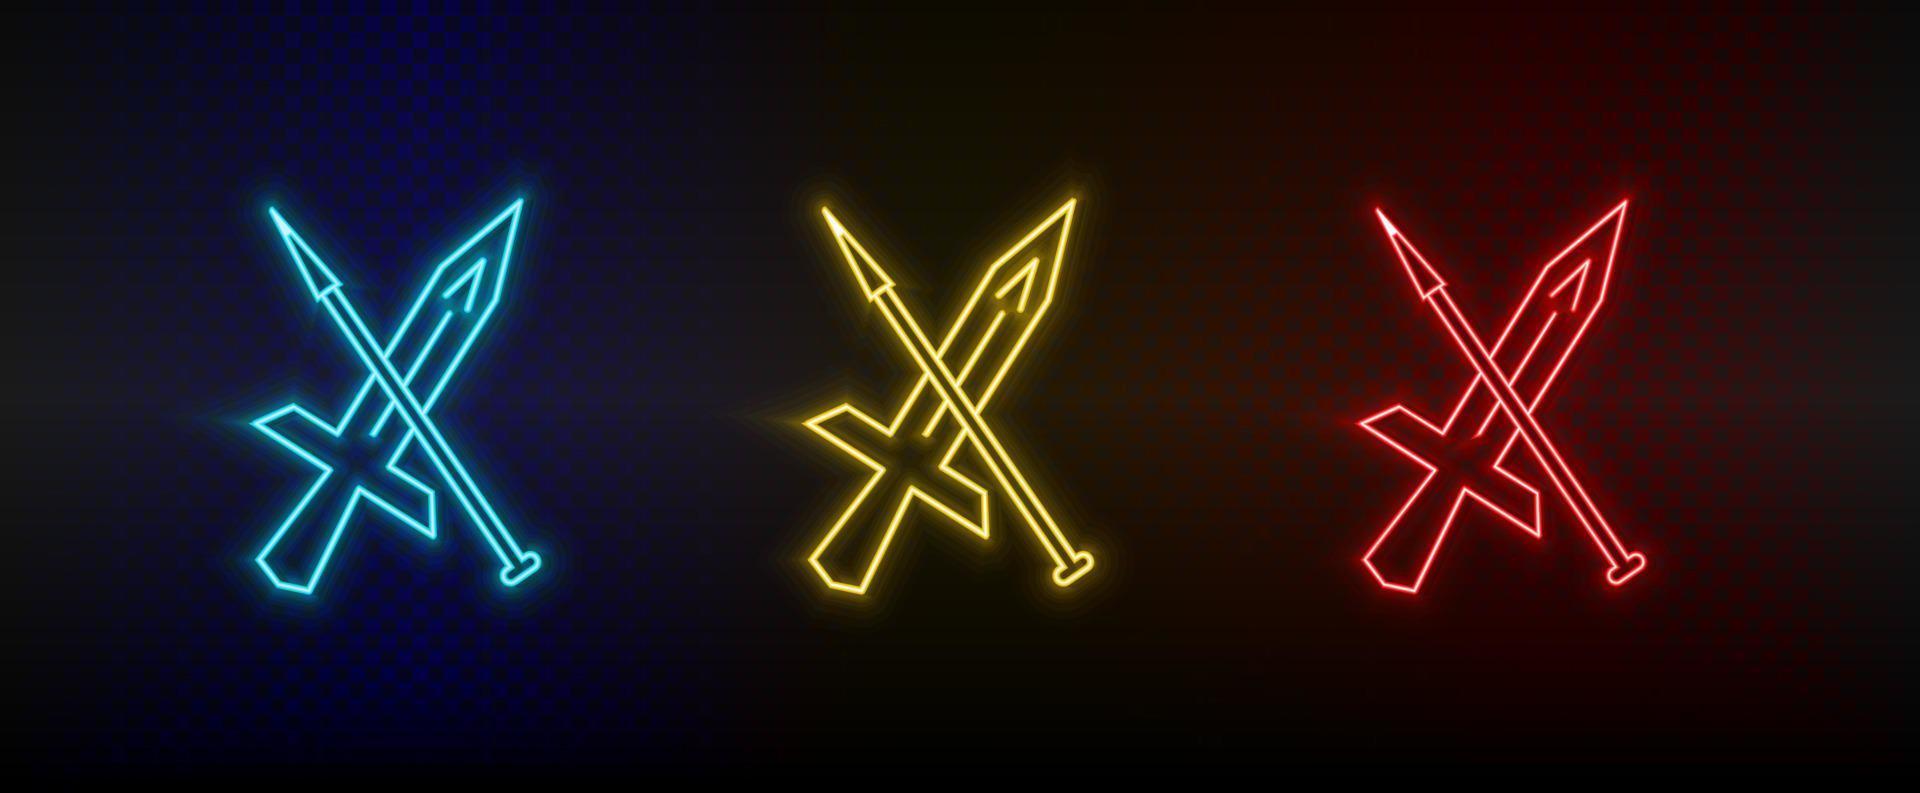 Neon icons. Sward fighting games retro. Set of red, blue, yellow neon vector icon on darken background